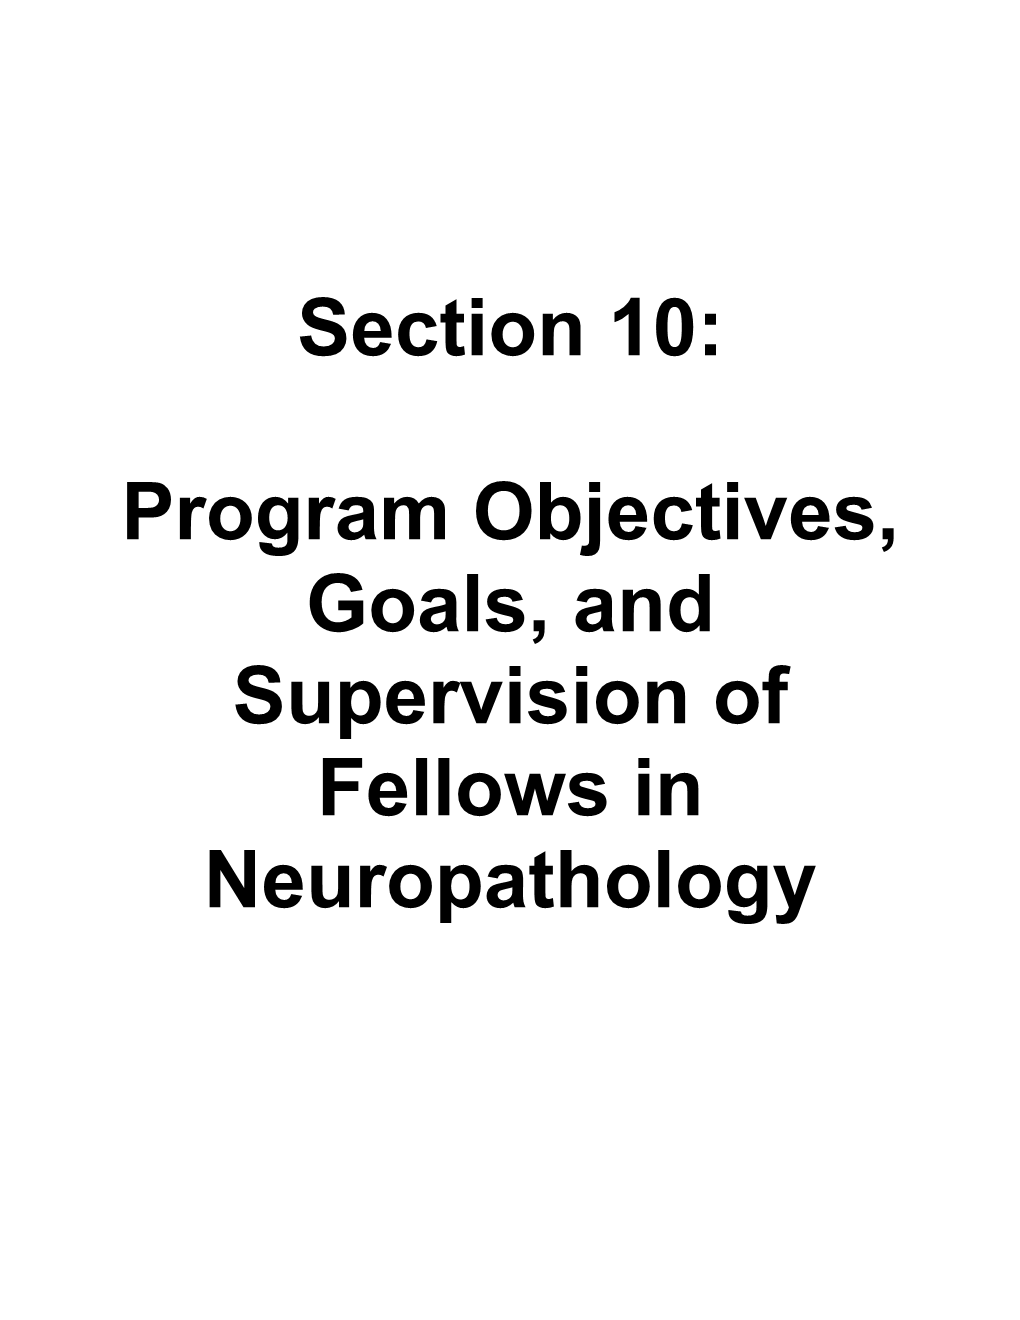 Program Objectives for Neuropathology Fellowship